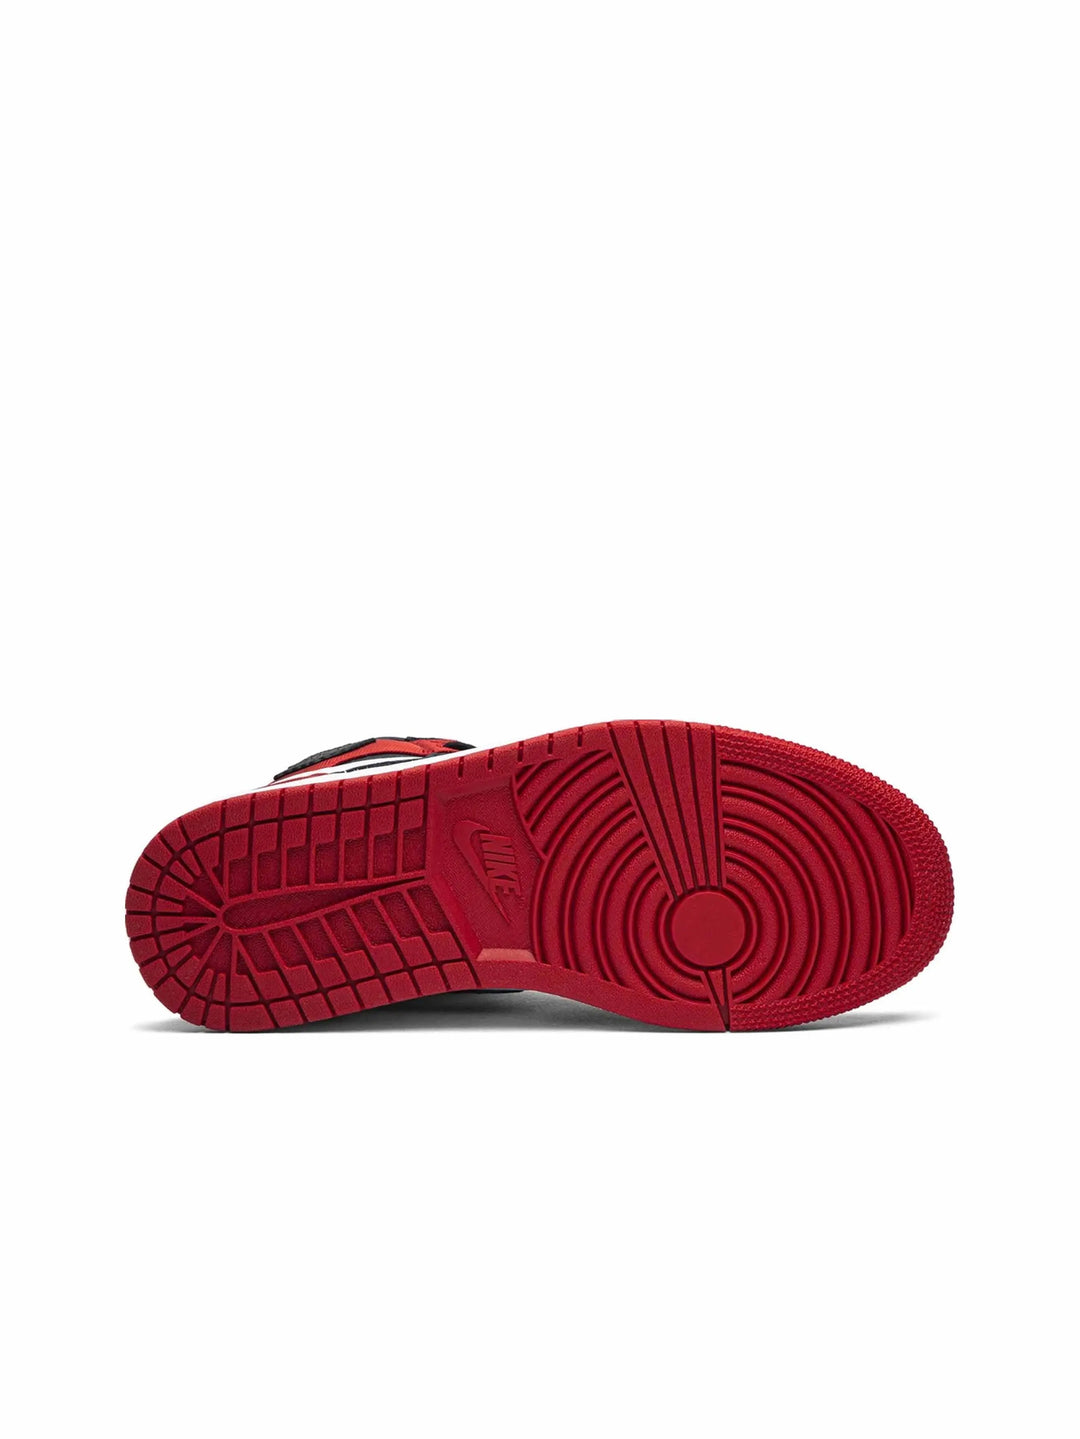 Nike Air Jordan 1 Retro High Satin Black Toe (W) in Auckland, New Zealand - Shop name